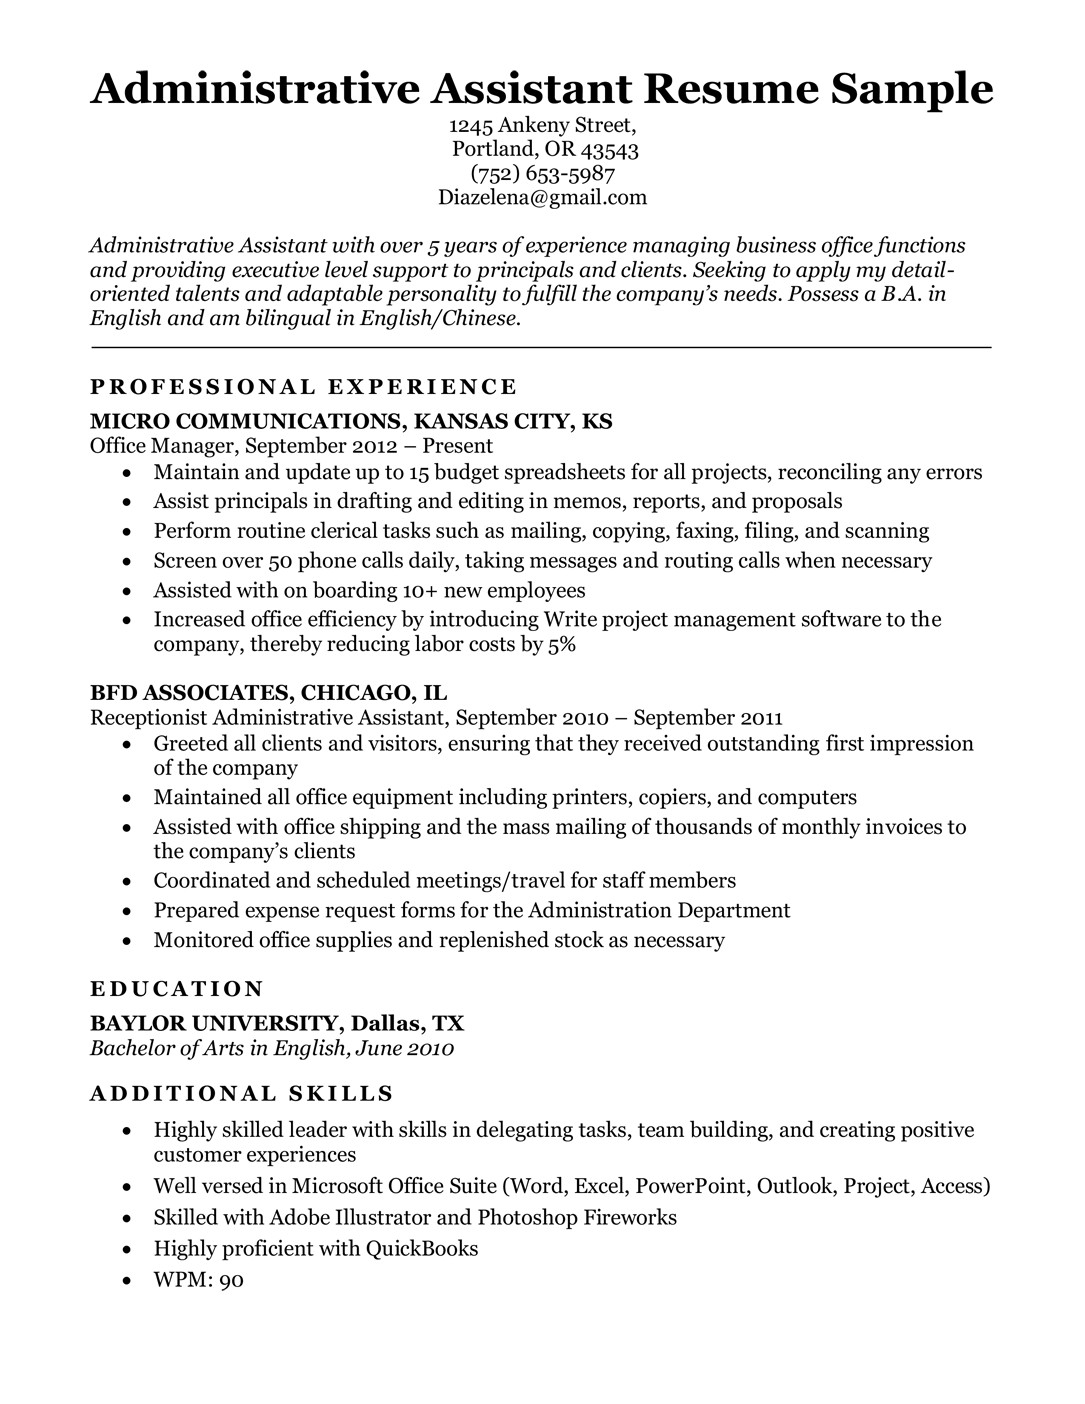 Administrative assistant Job Description Resume Sample Admin assistant Resume Template